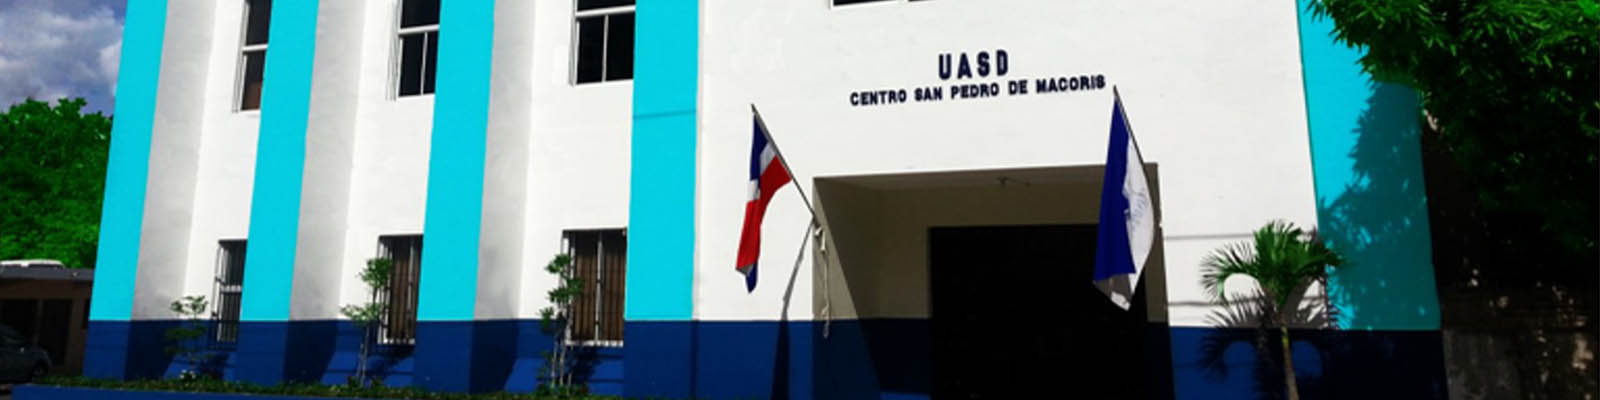 Recinto San Pedro de Macorís – Universidad Autónoma de Santo Domingo (UASD)